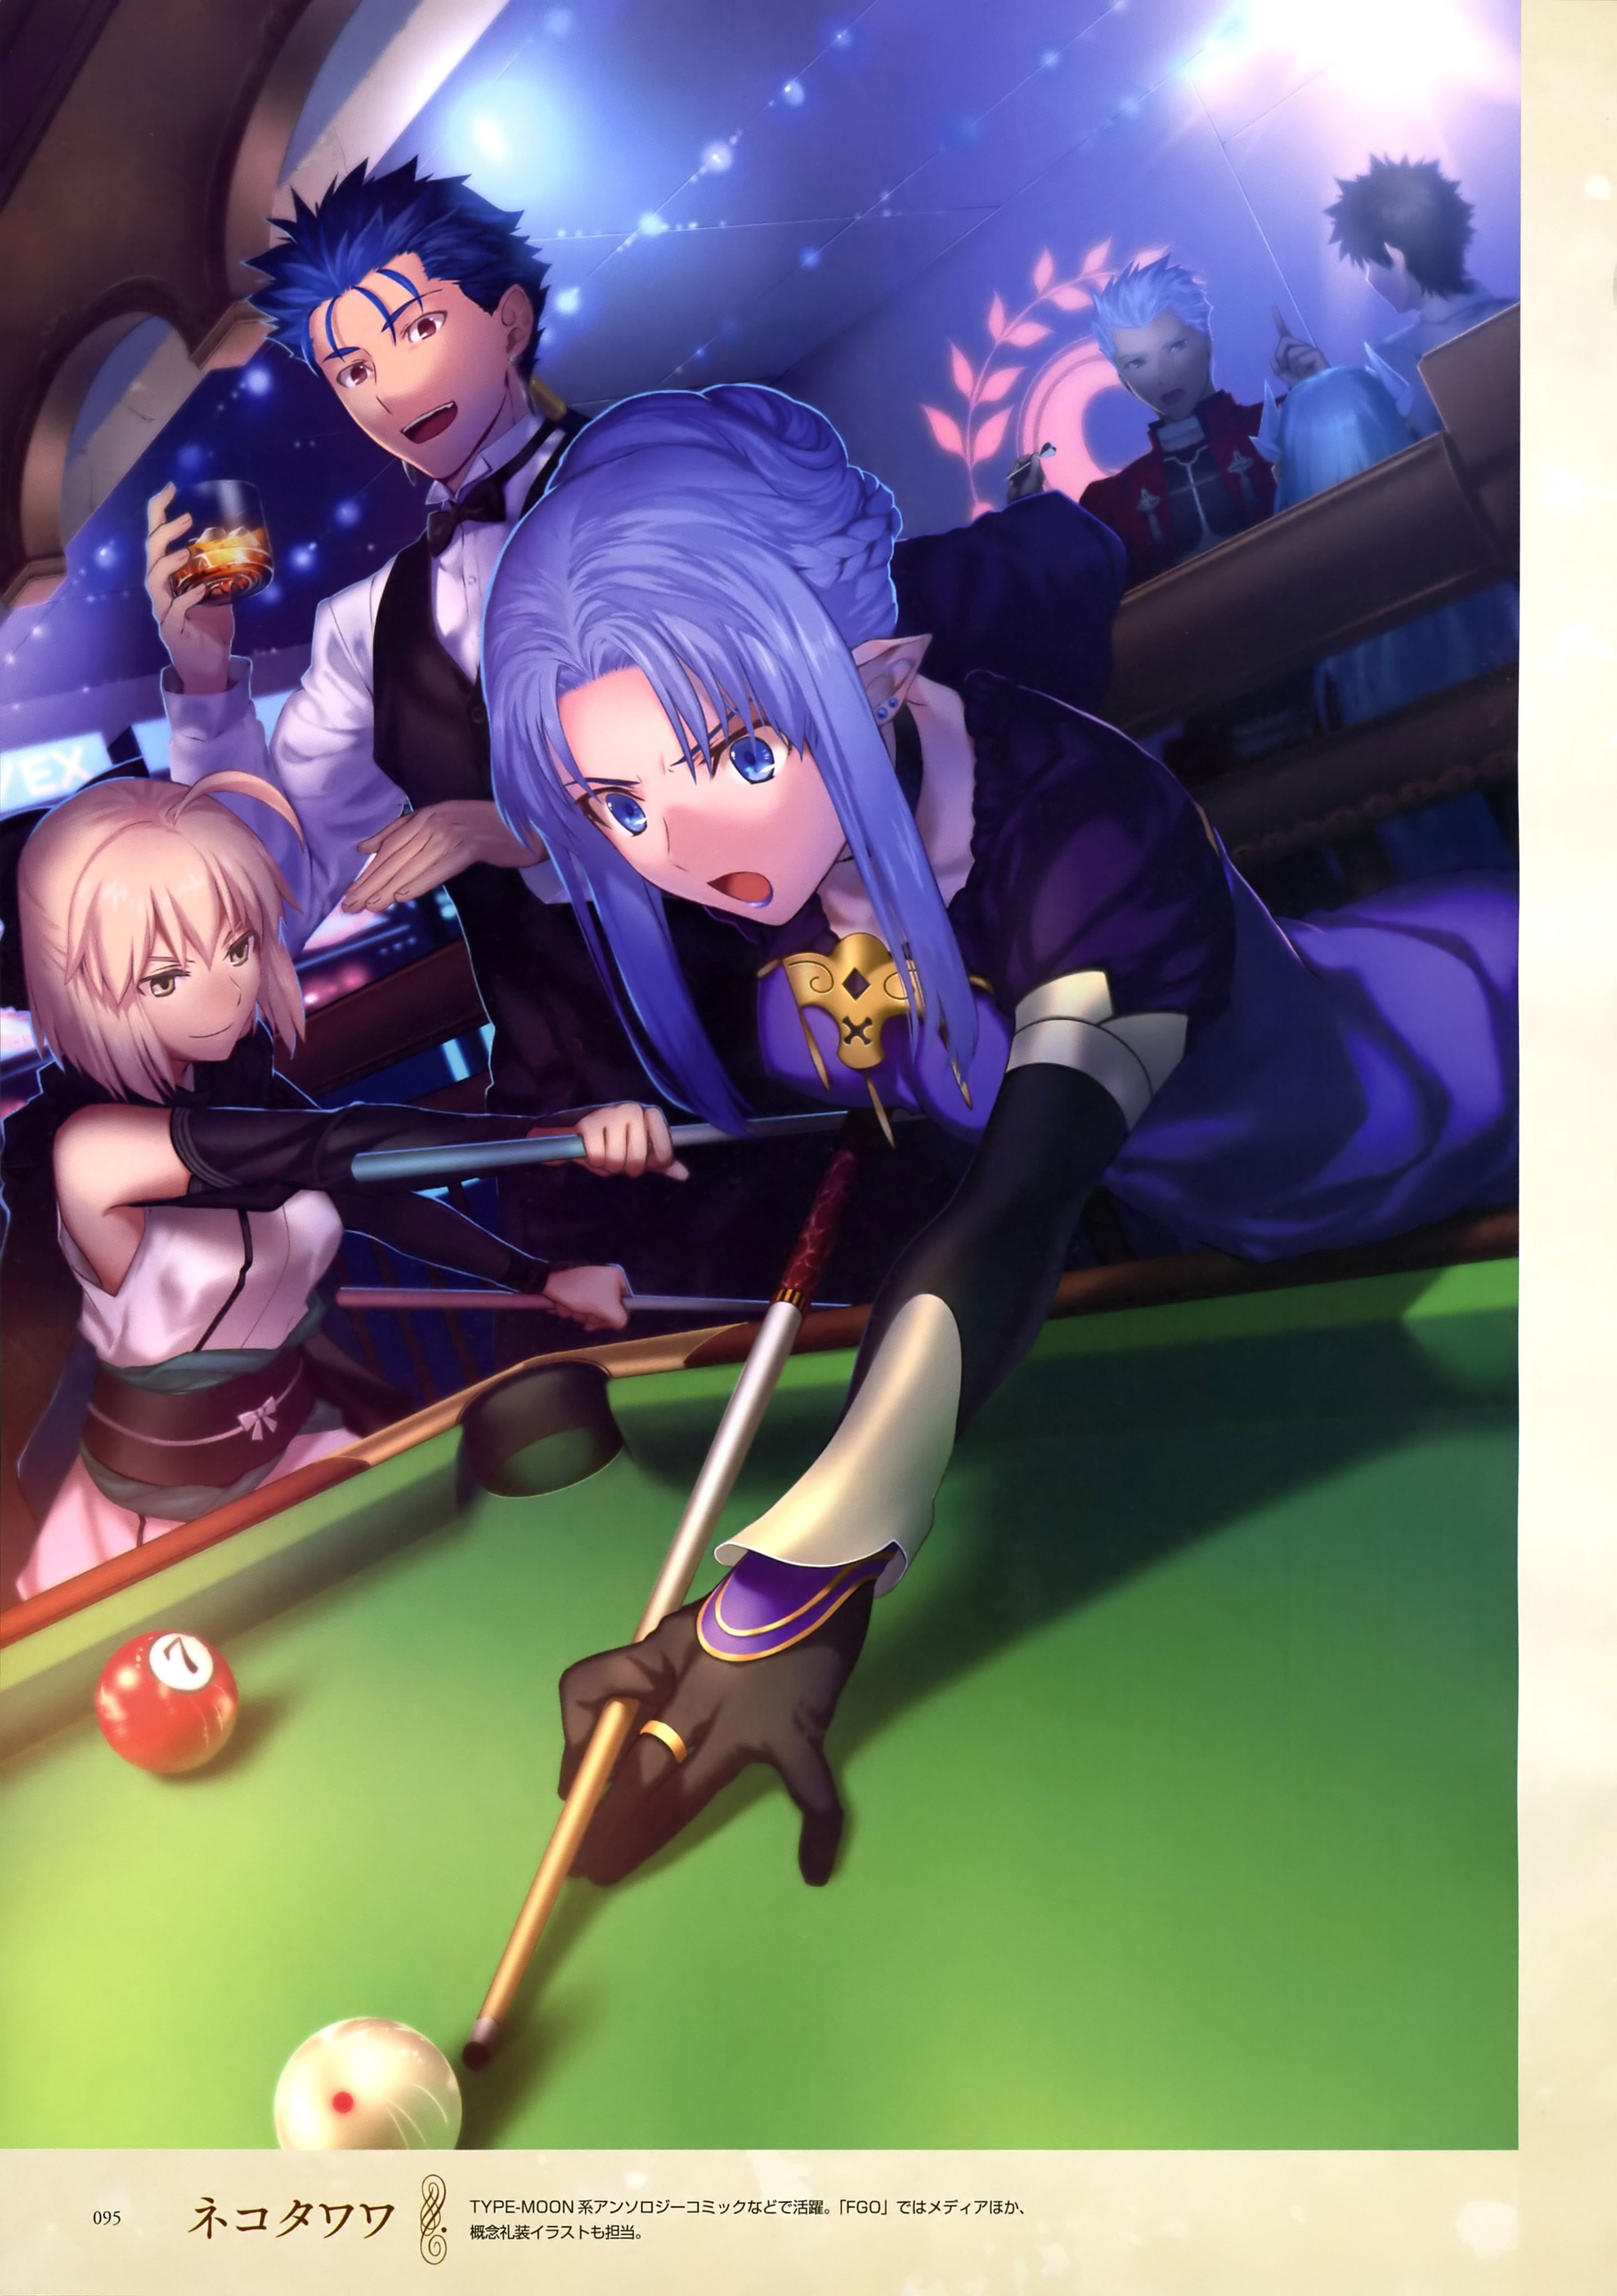 Wallpaper Emiya Shirou Blue Haired Woman Playing, Emiya Shirou, Anime